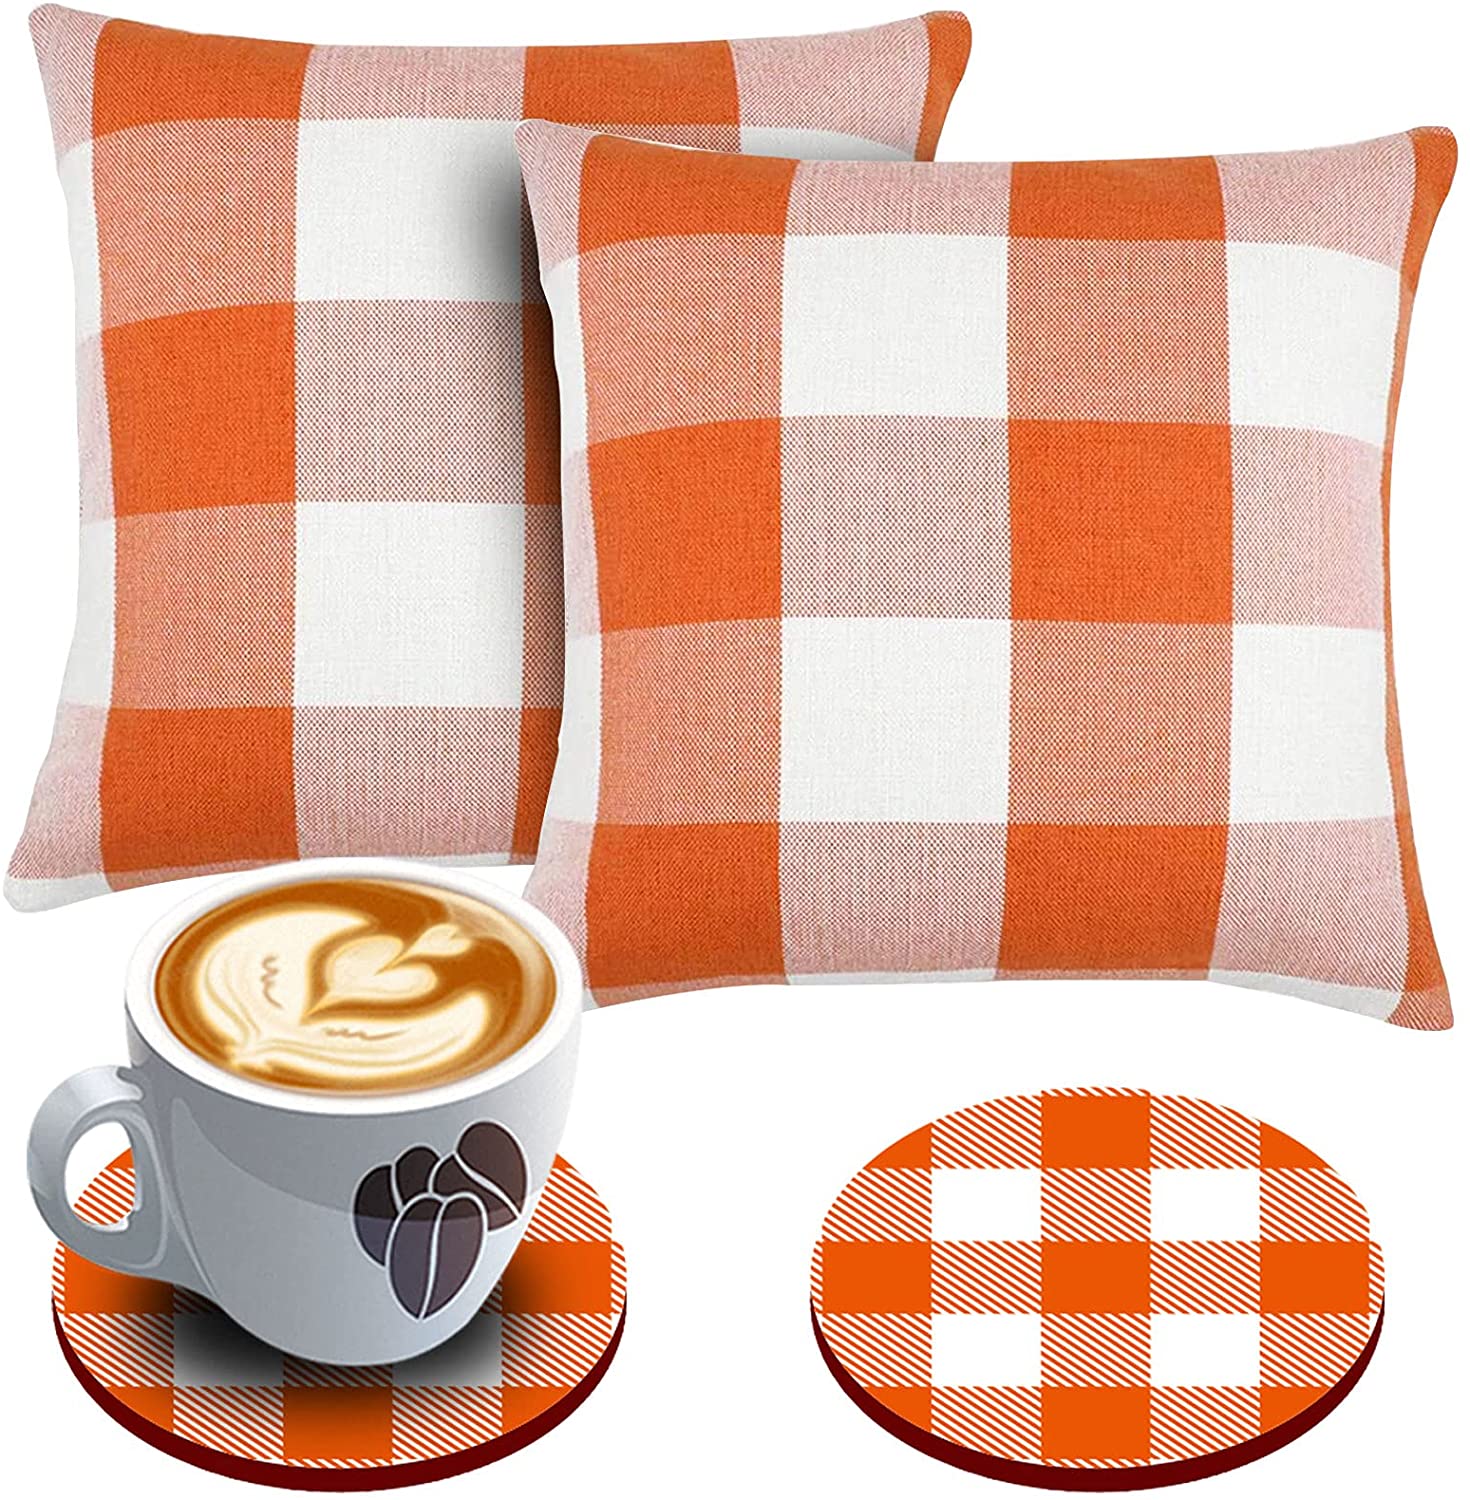 Set of 2 Buffalo Check Pillow Covers 18 x 18 with 2 Bonus Coasters (Orange & White)